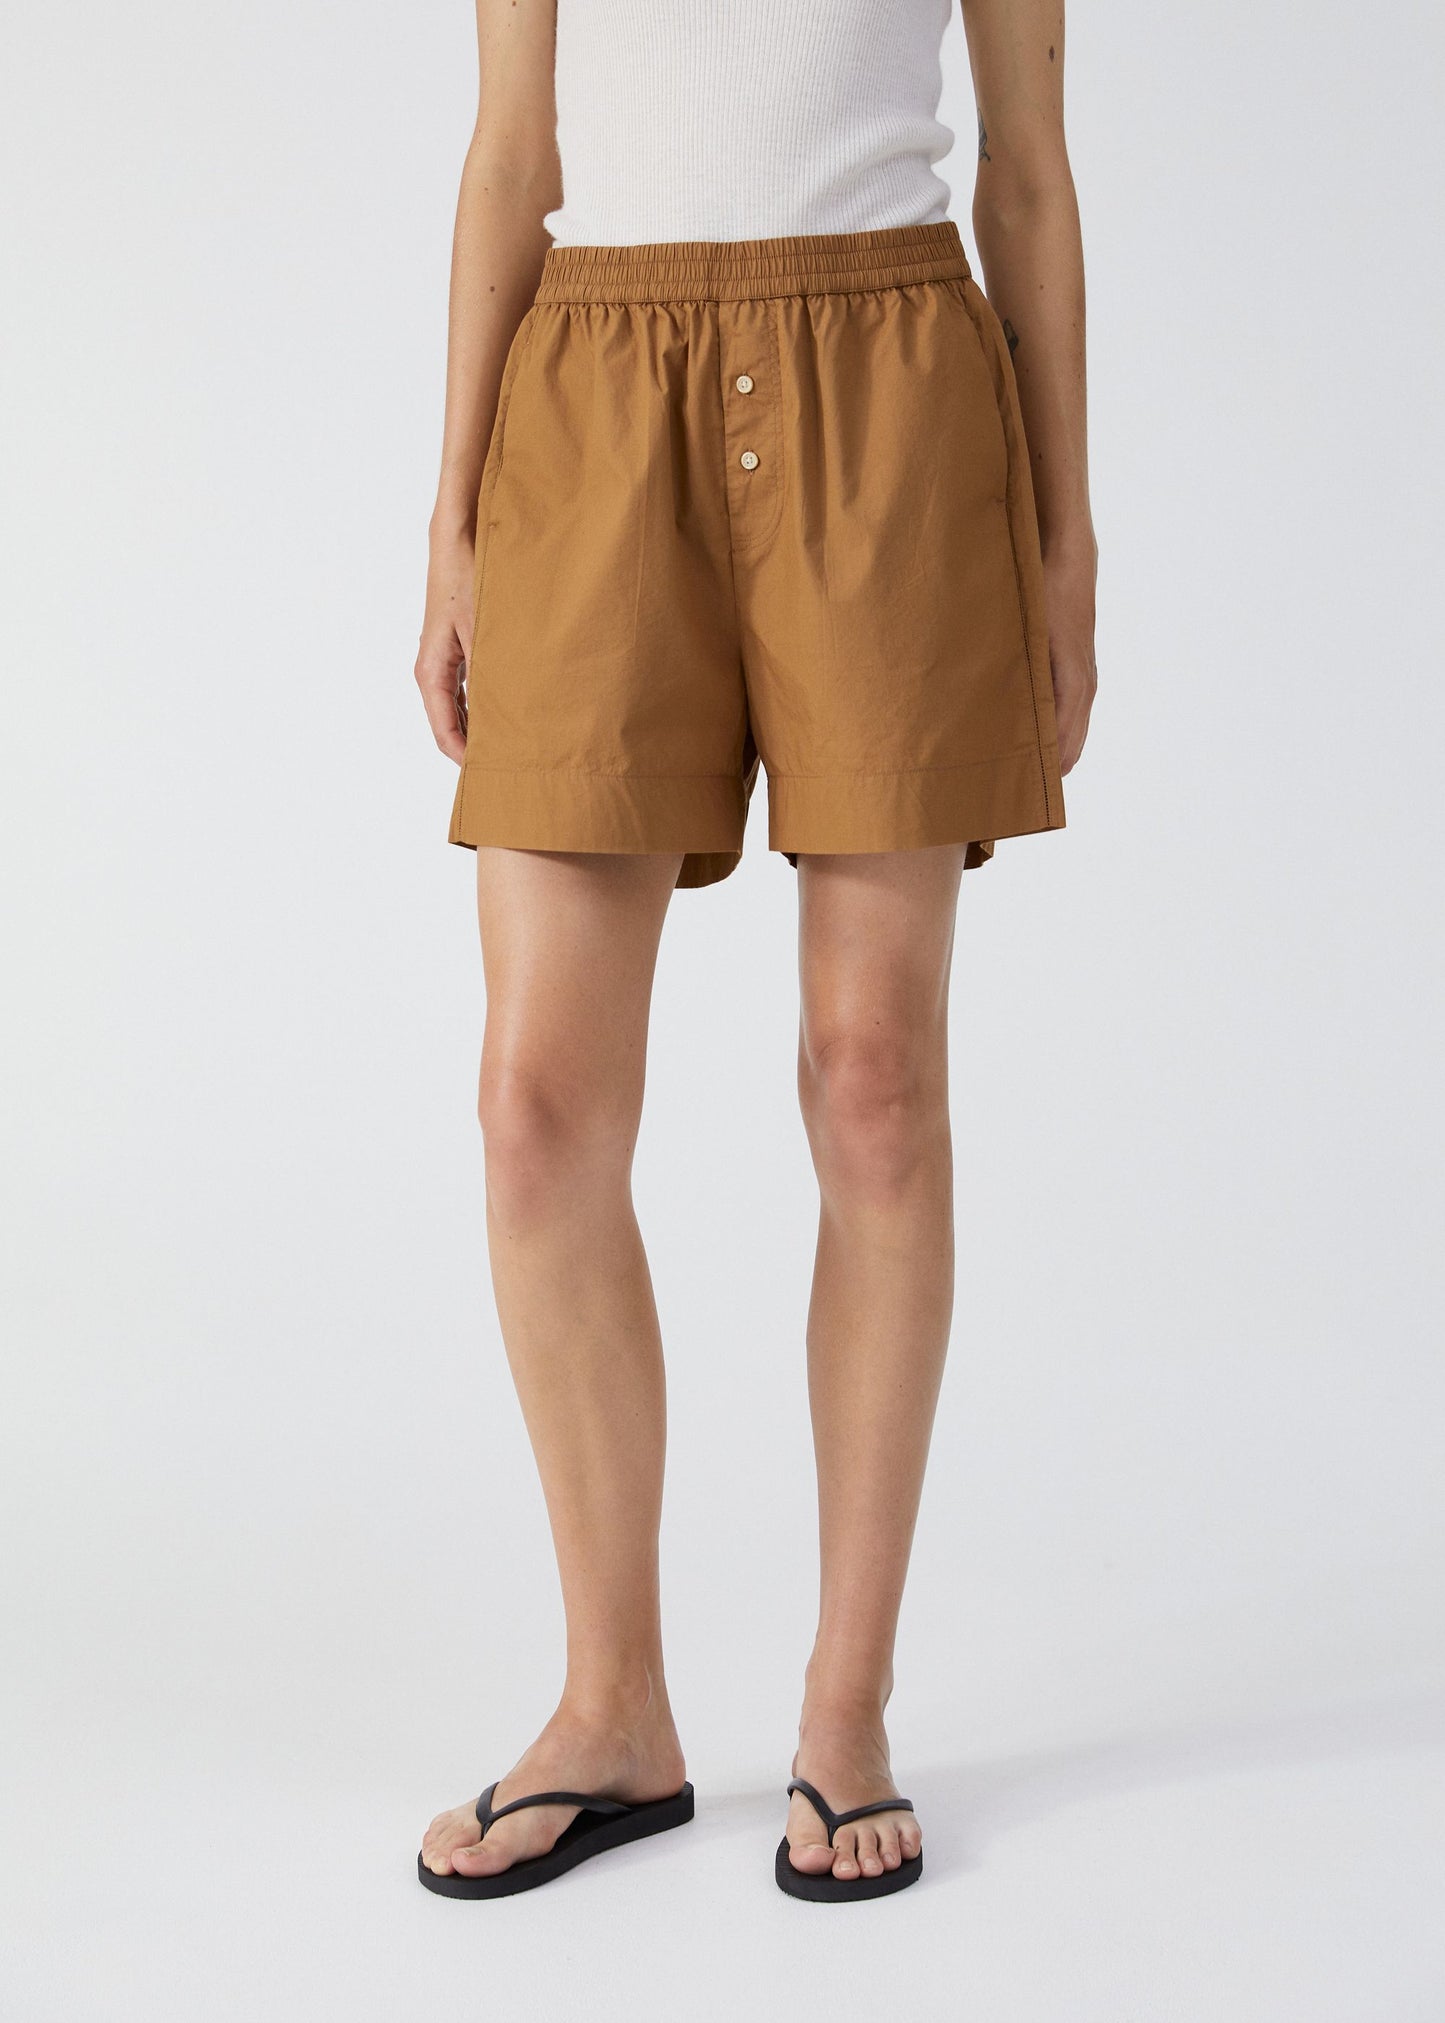 Aiayu "Casual Shorts" Cinnamon